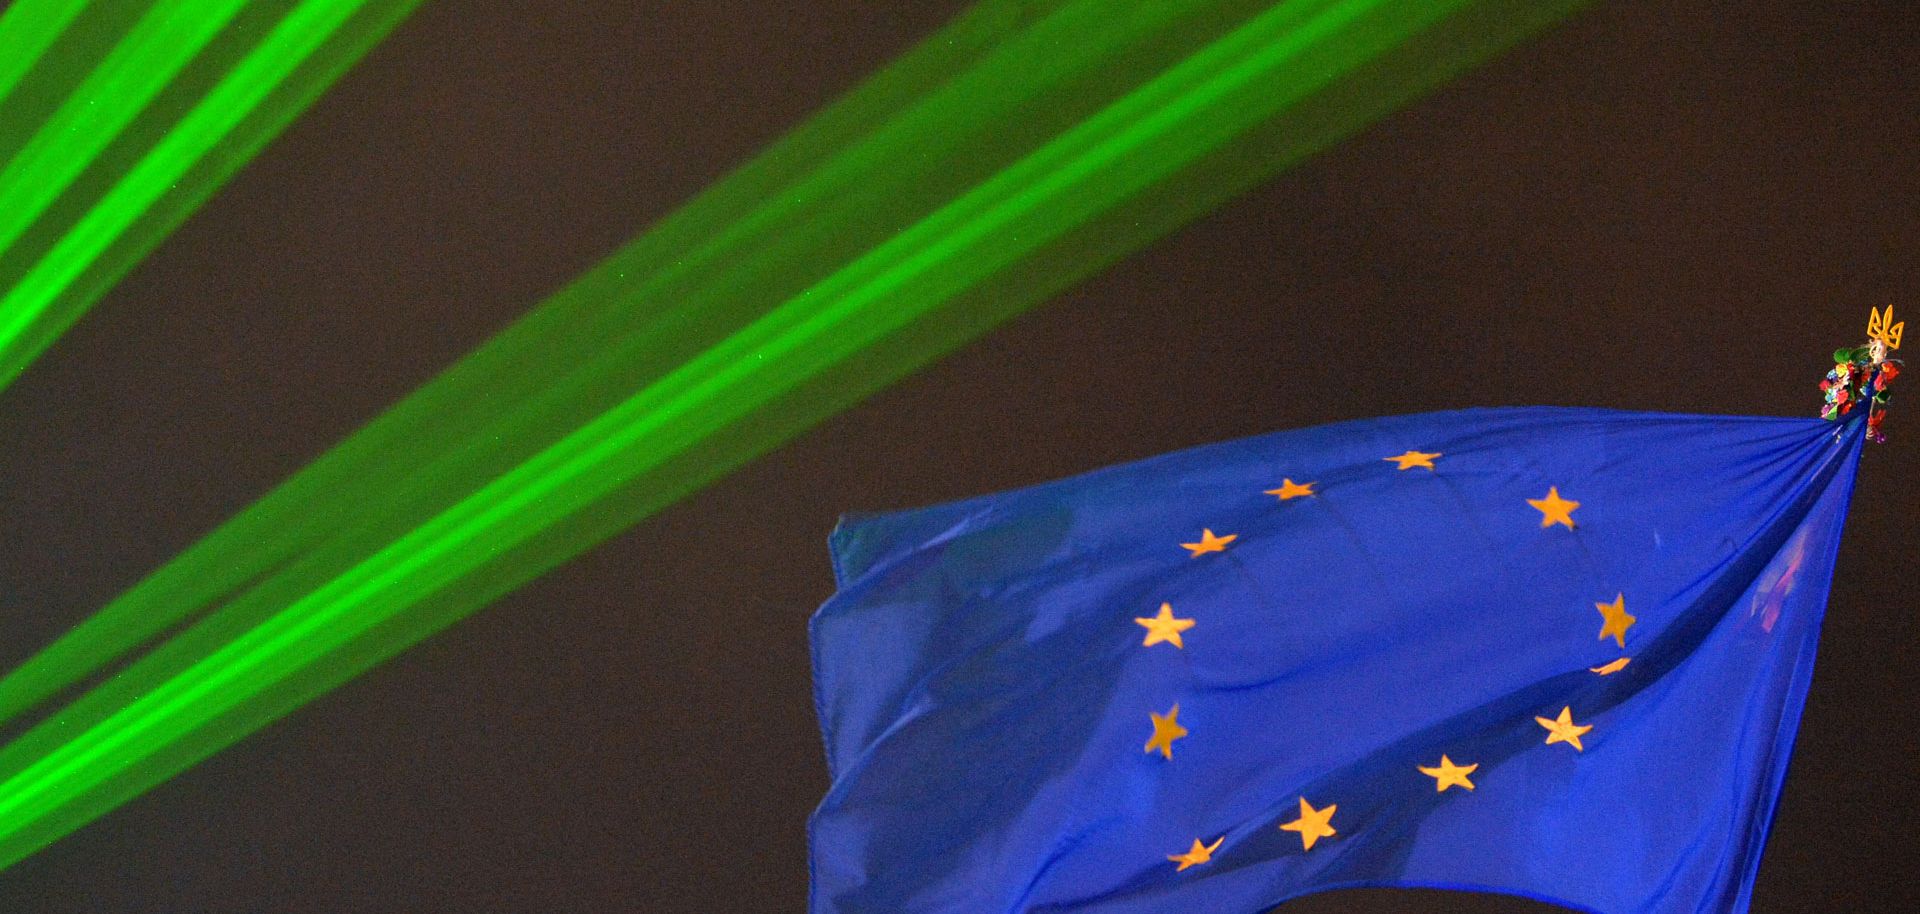 A European Union flag flies above Kiev’s Maidan Square illuminated by green lights (VIKTOR DRACHEV/AFP/Getty Images)